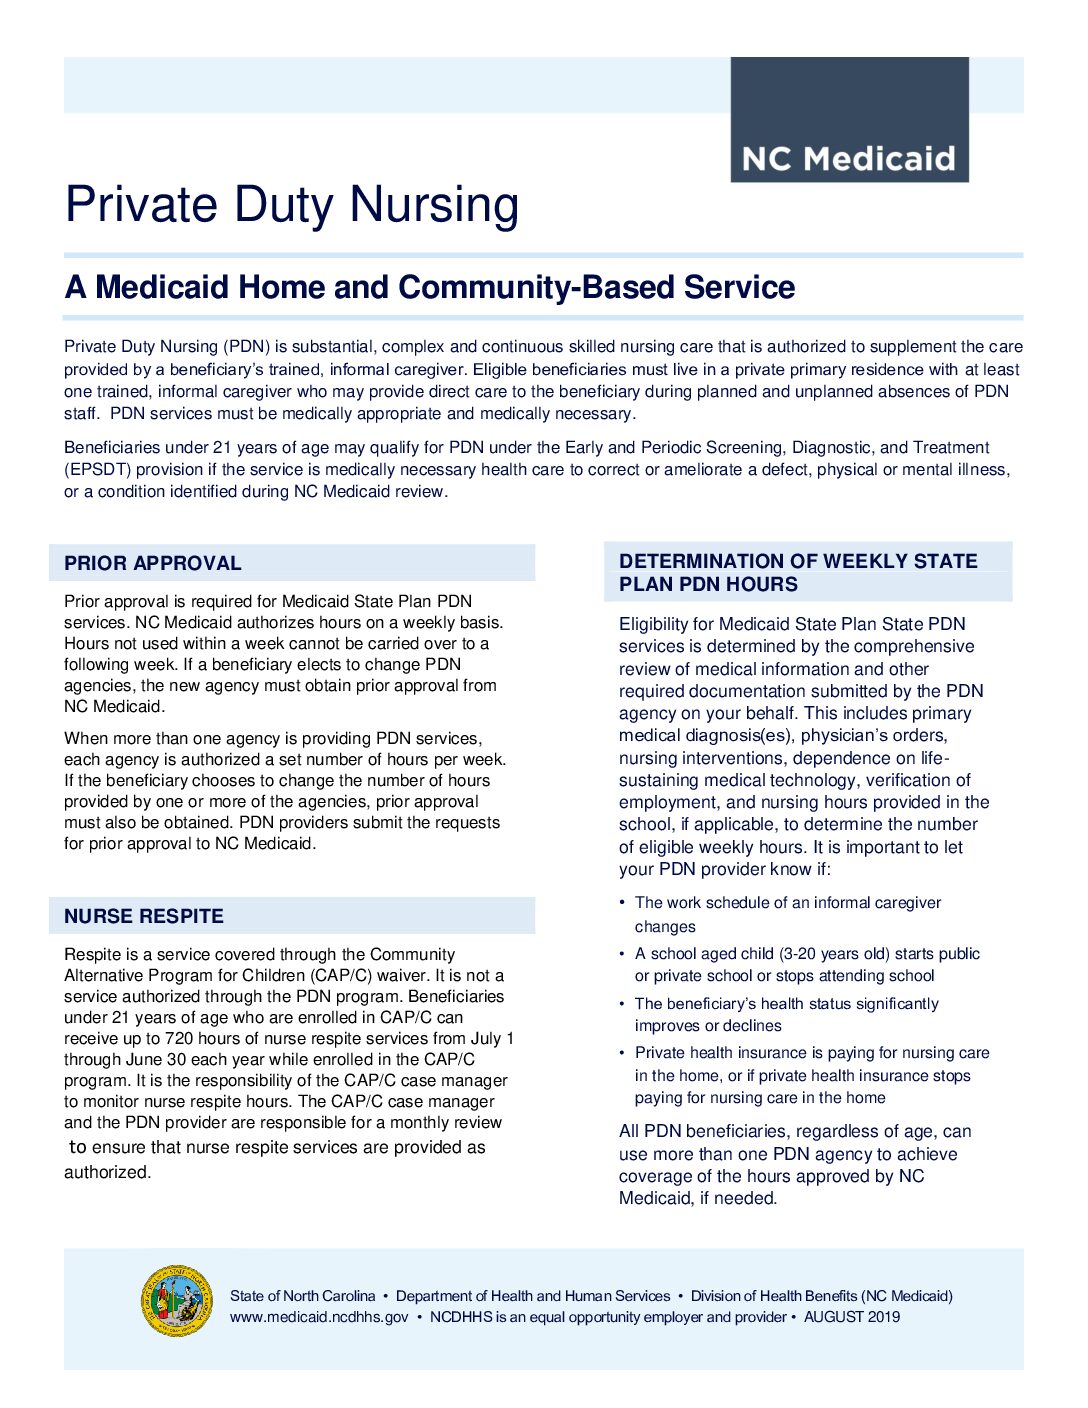 Private Pflegedienste